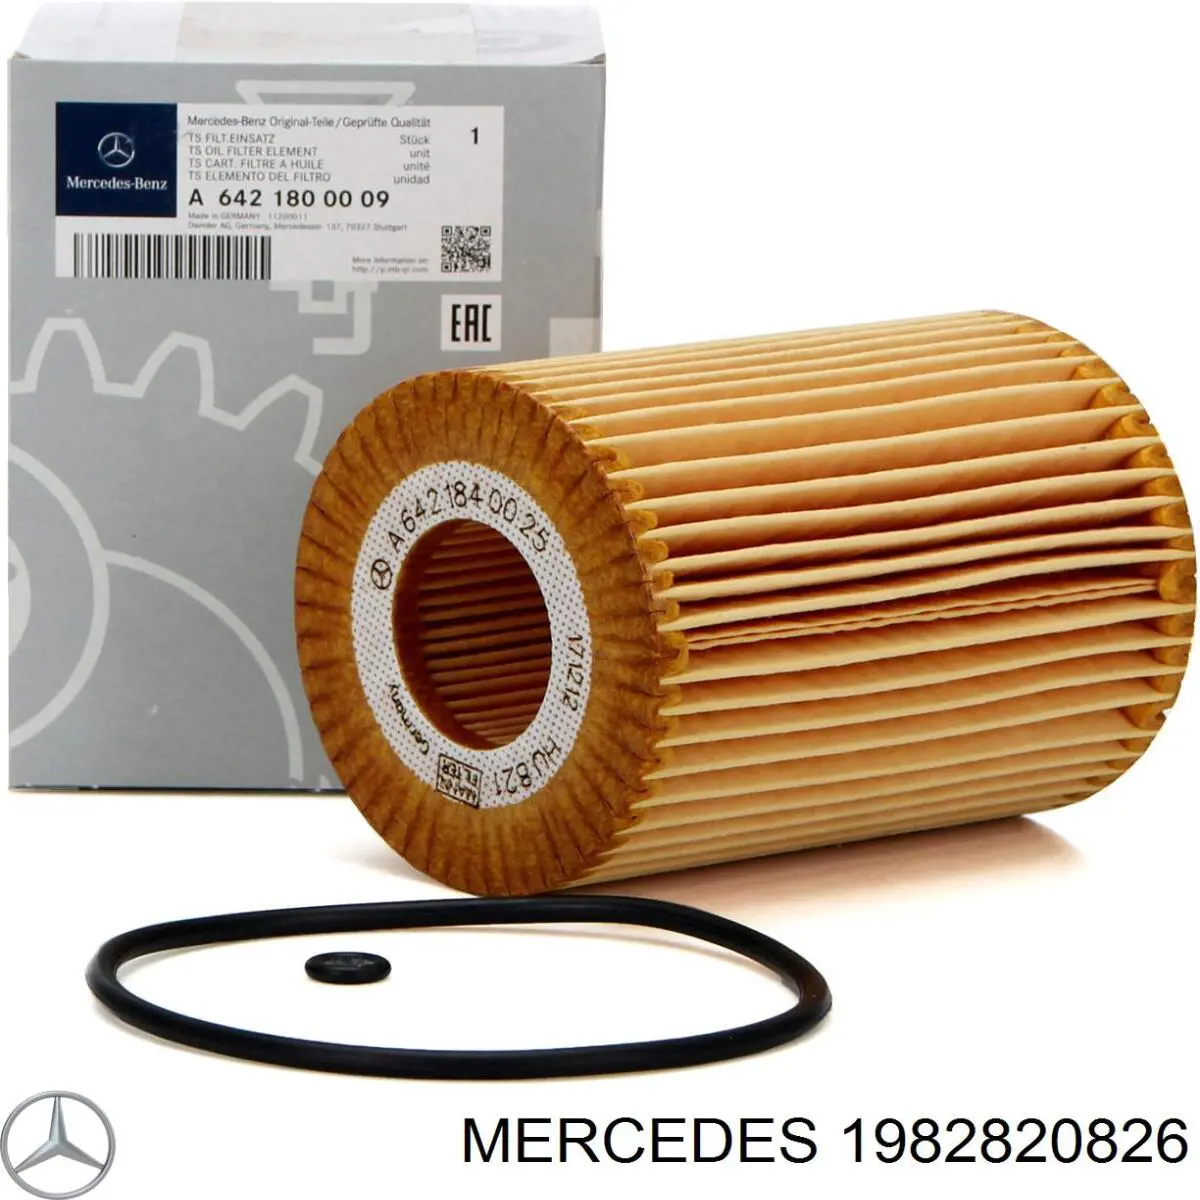 Batería de Arranque Mercedes (1982820826)